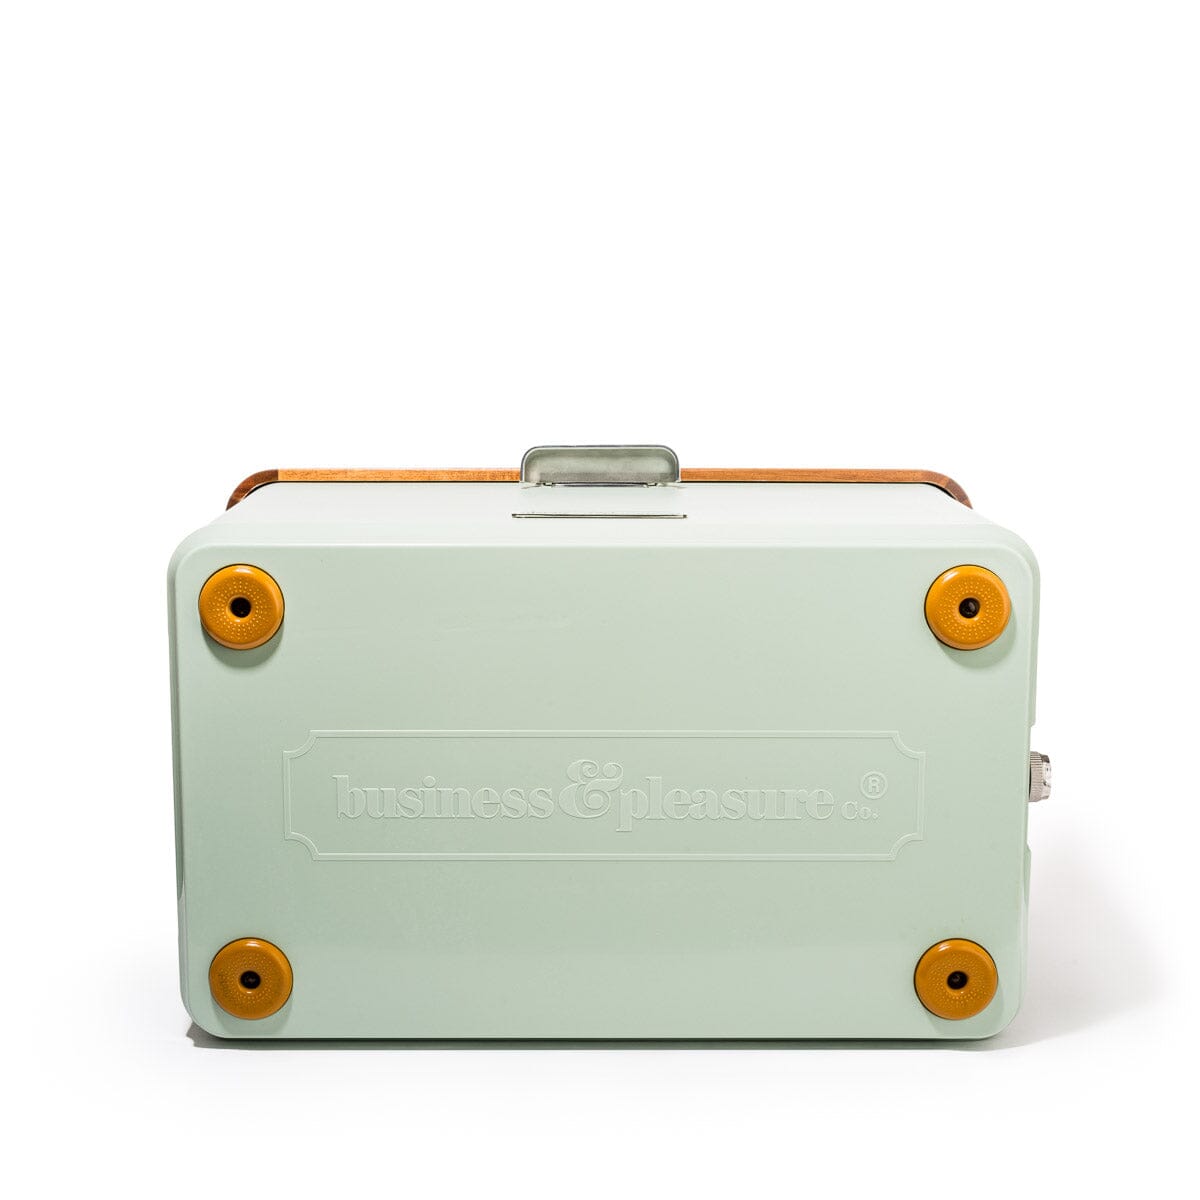 The Hemingway Cooler - Sage Green - 55 Quarts Hard Cooler Business & Pleasure Co 